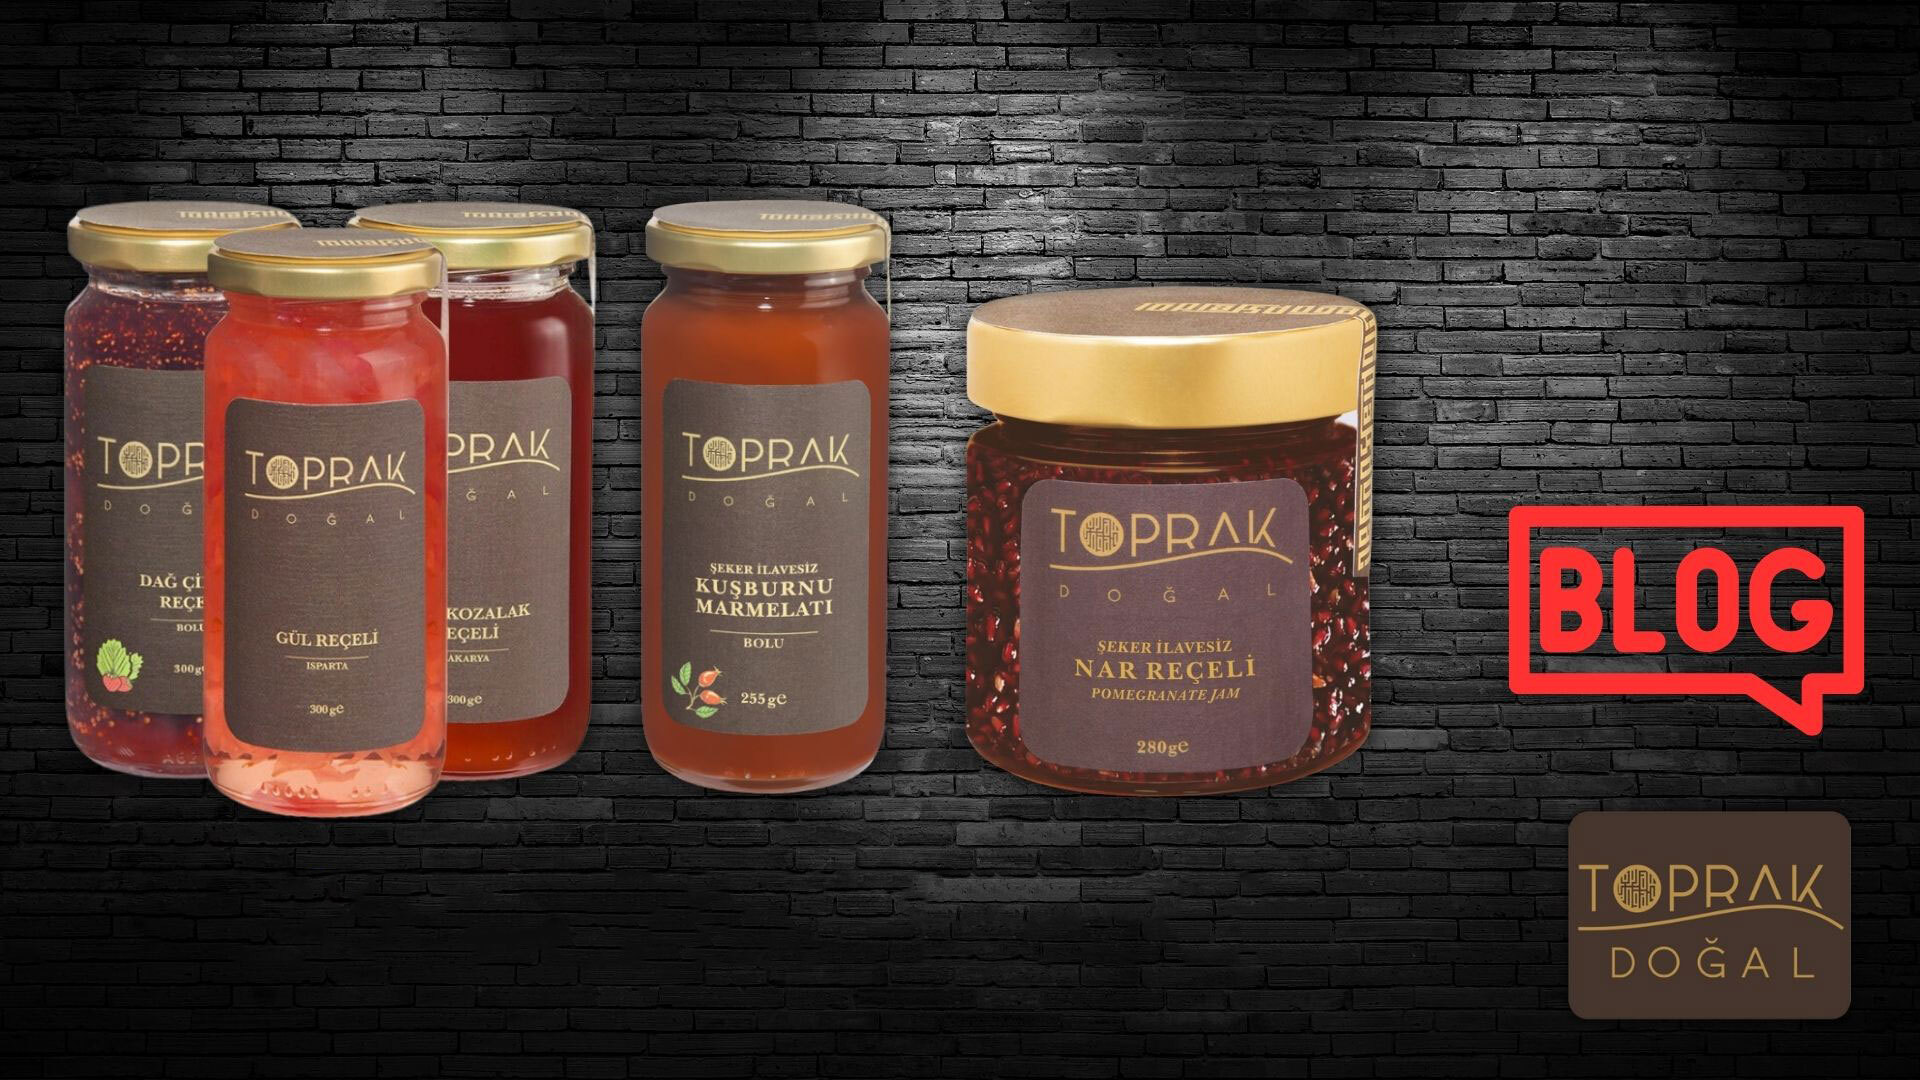 Premium Quality Organic Jams & Marmalades at Toprak Dogal